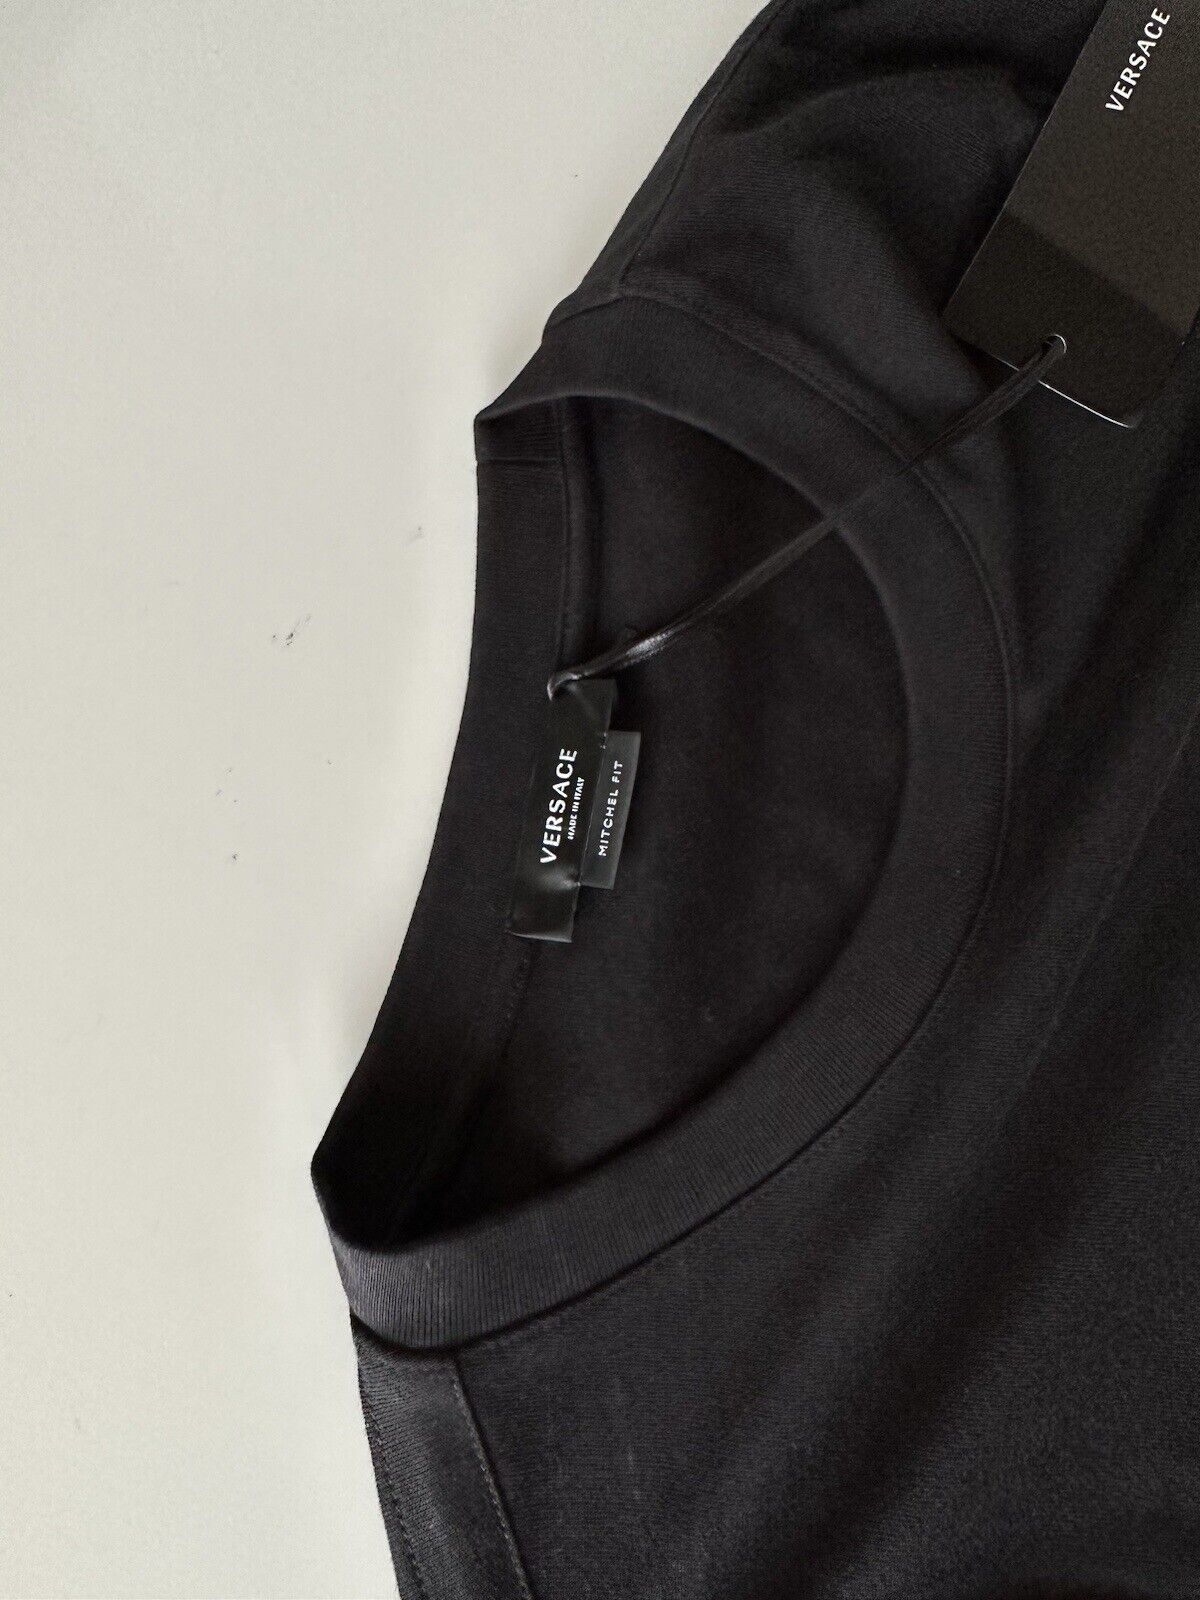 NWT 525 $ Versace Milano Logo Schwarzes Mitchel Fit Jersey T-Shirt 2XL 1005188 Italien